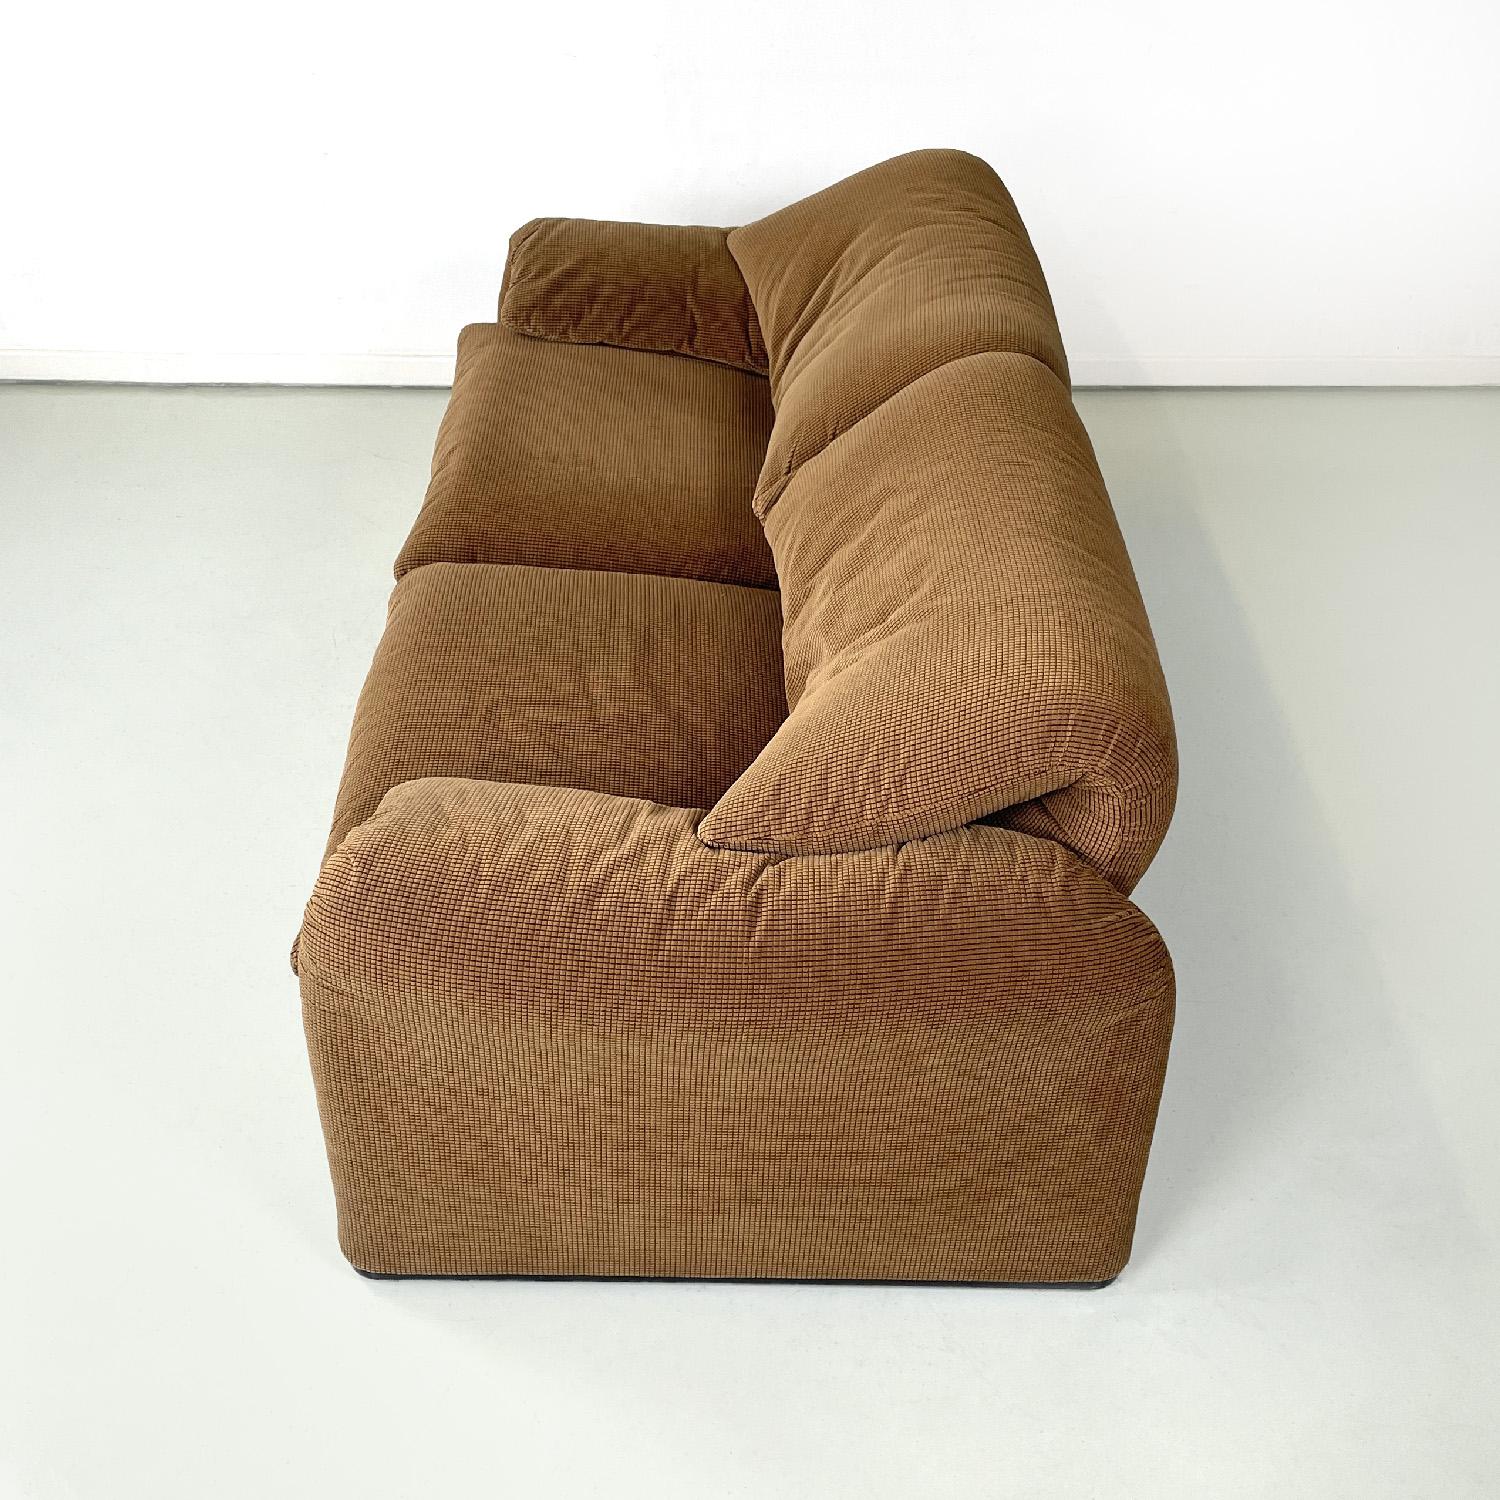 Italian modern brown sofas Maralunga by Vico Magistretti for Cassina, 1973 For Sale 2